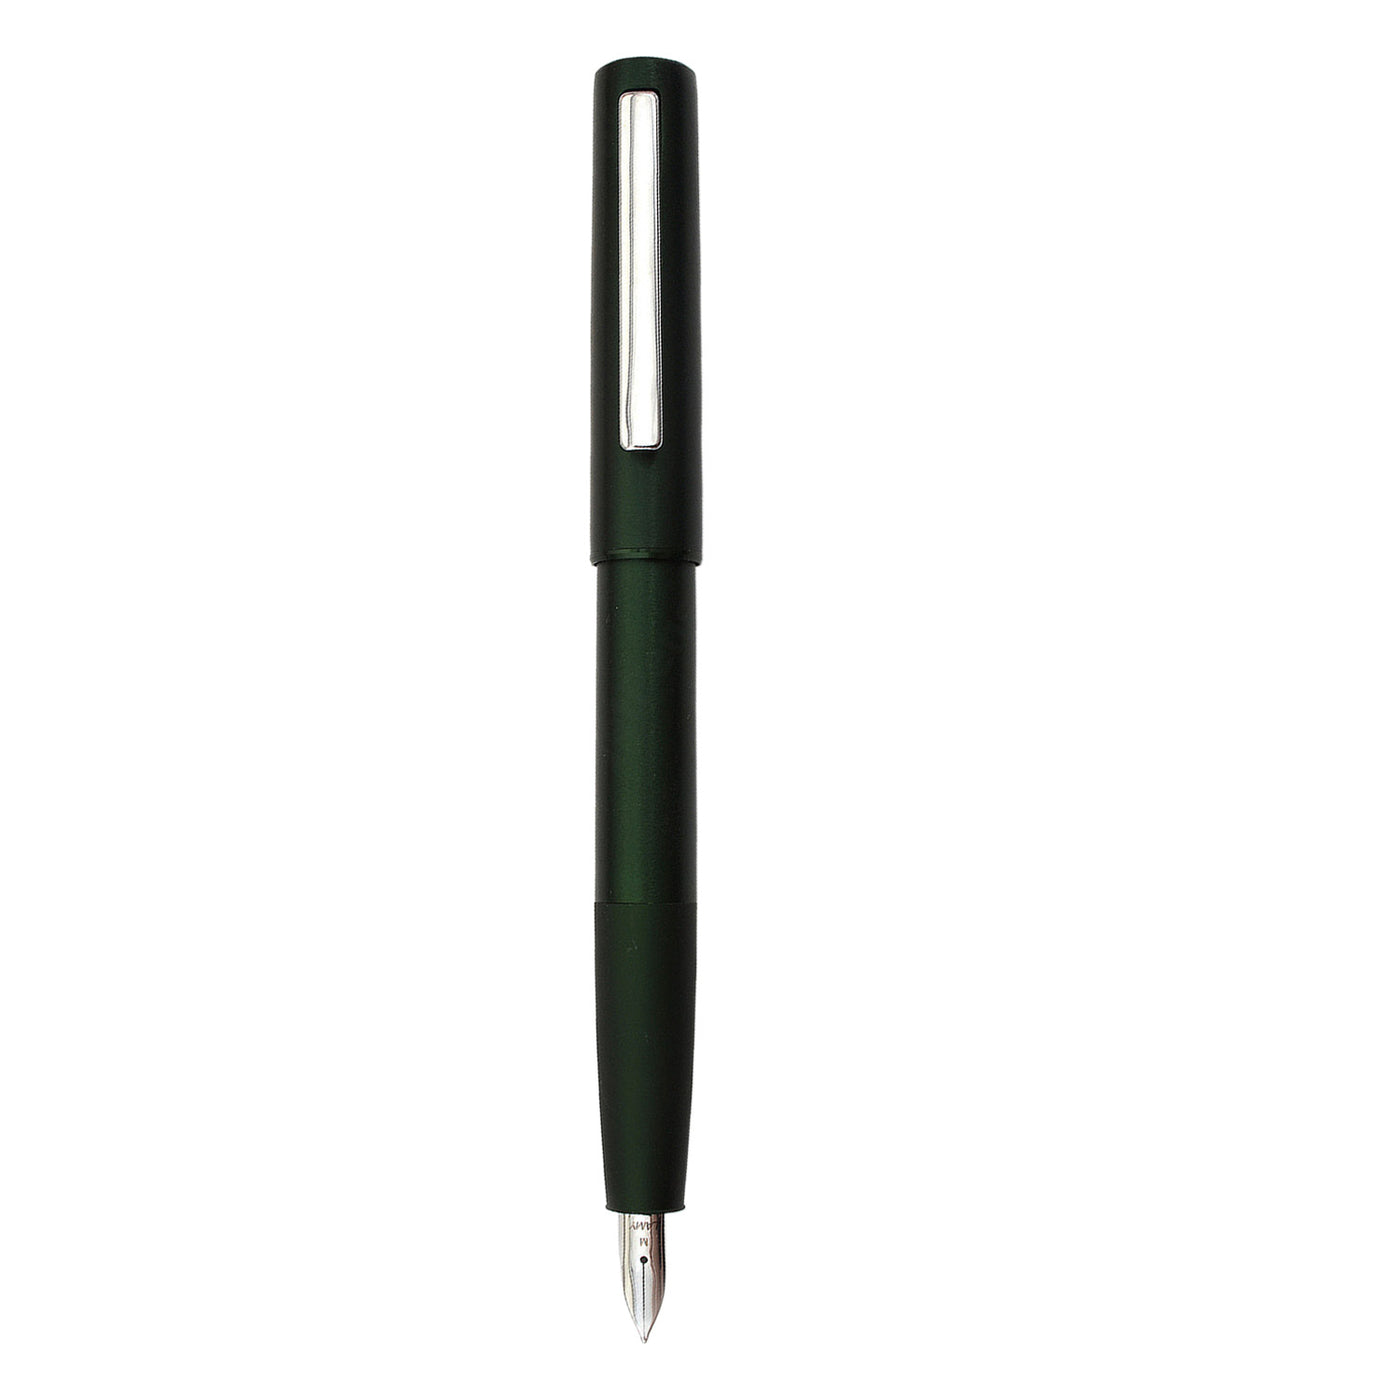 Lamy Aion Fountain Pen - Dark Green (Special Edition)